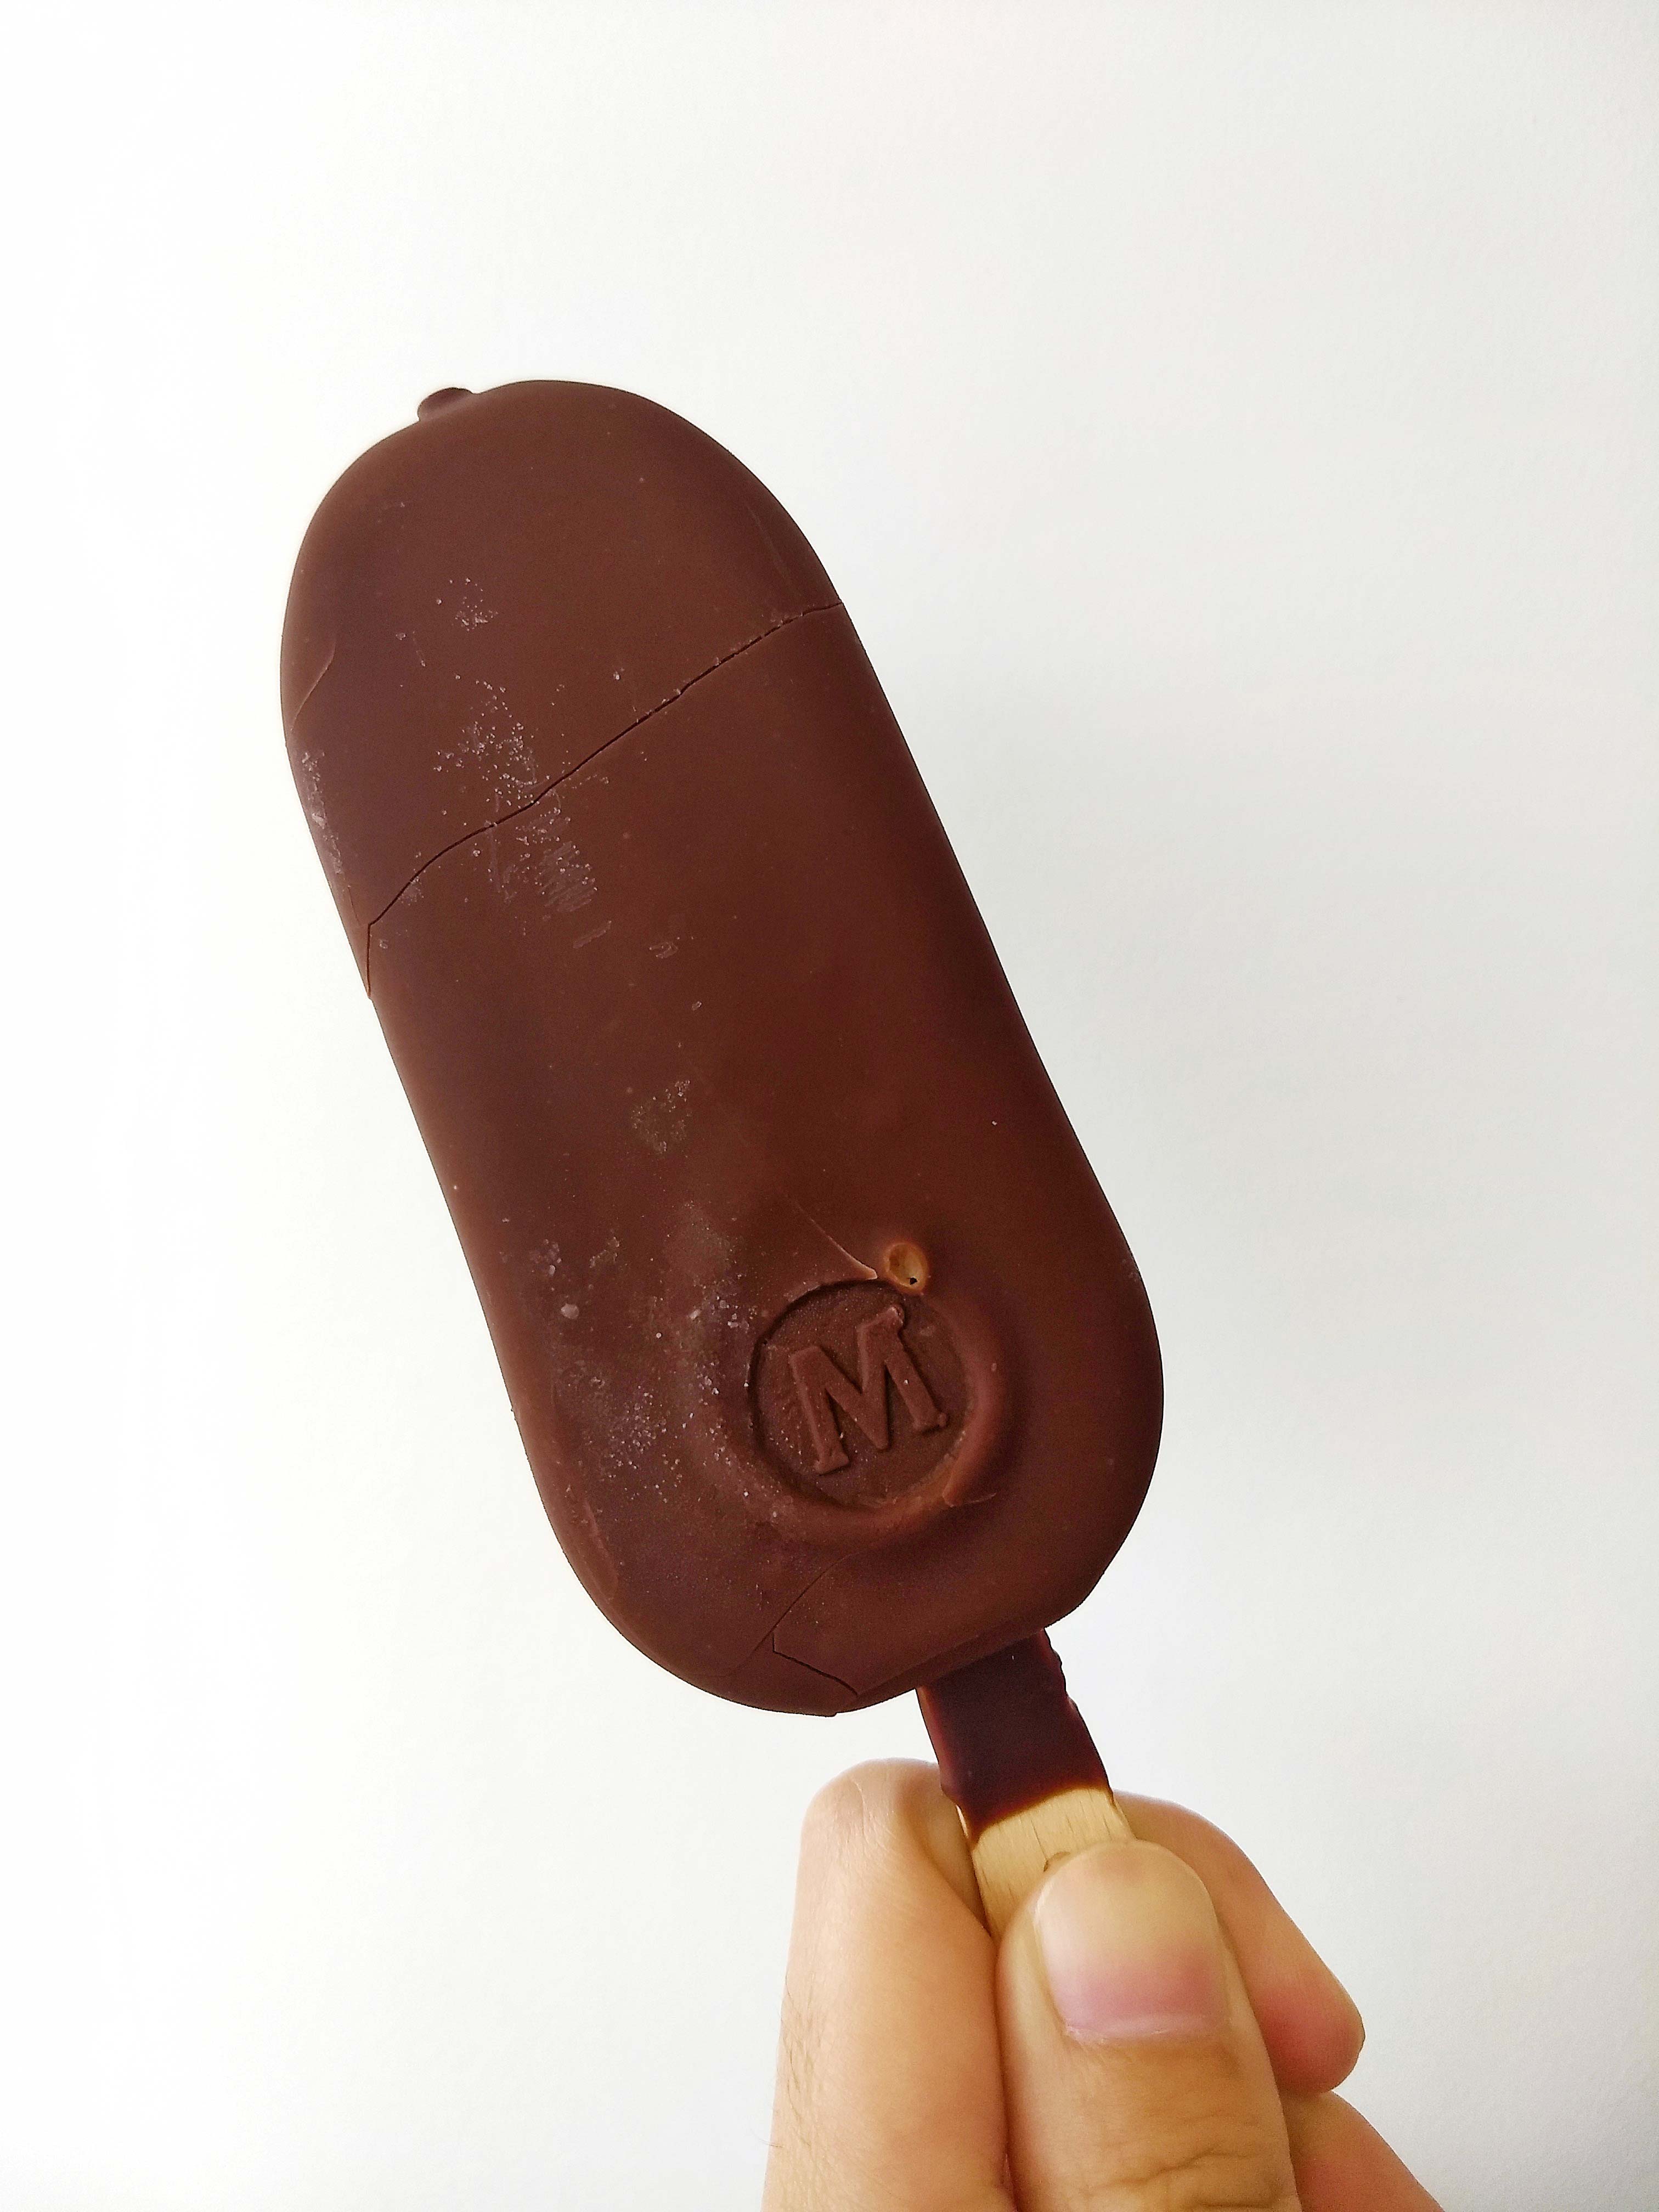 Vegan Ice Cream Bars Review & Taste Test - Make It Dairy Free